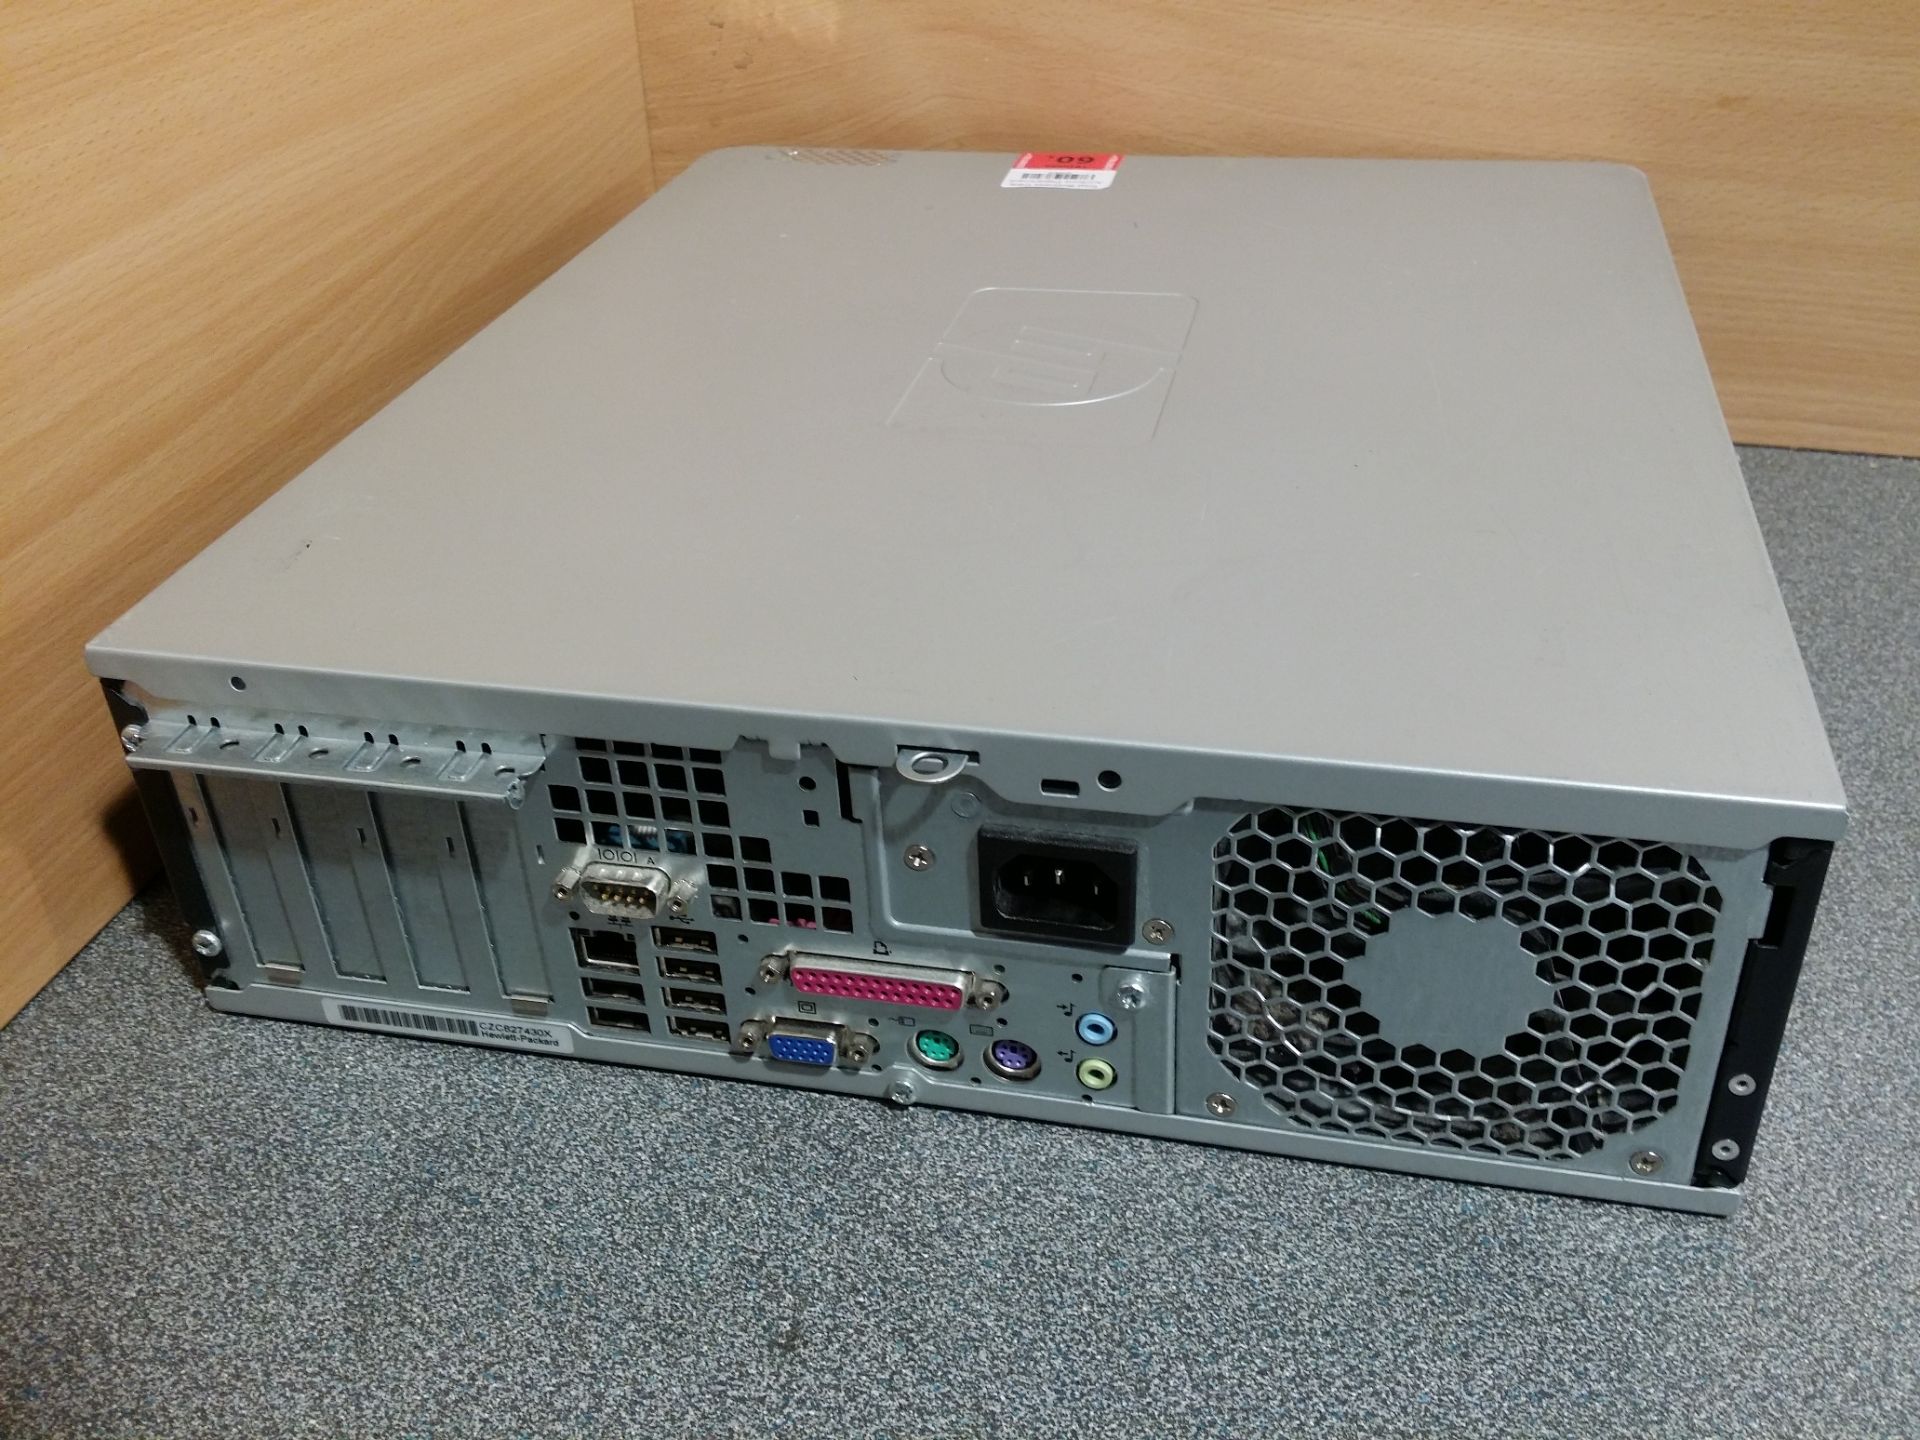 HP DC5800 Desktop Computer - Intel Core 2 Duo 2.33Ghz - 2GB Ram - 80GB Hdd - DVD-RW - Powers On - Image 2 of 2